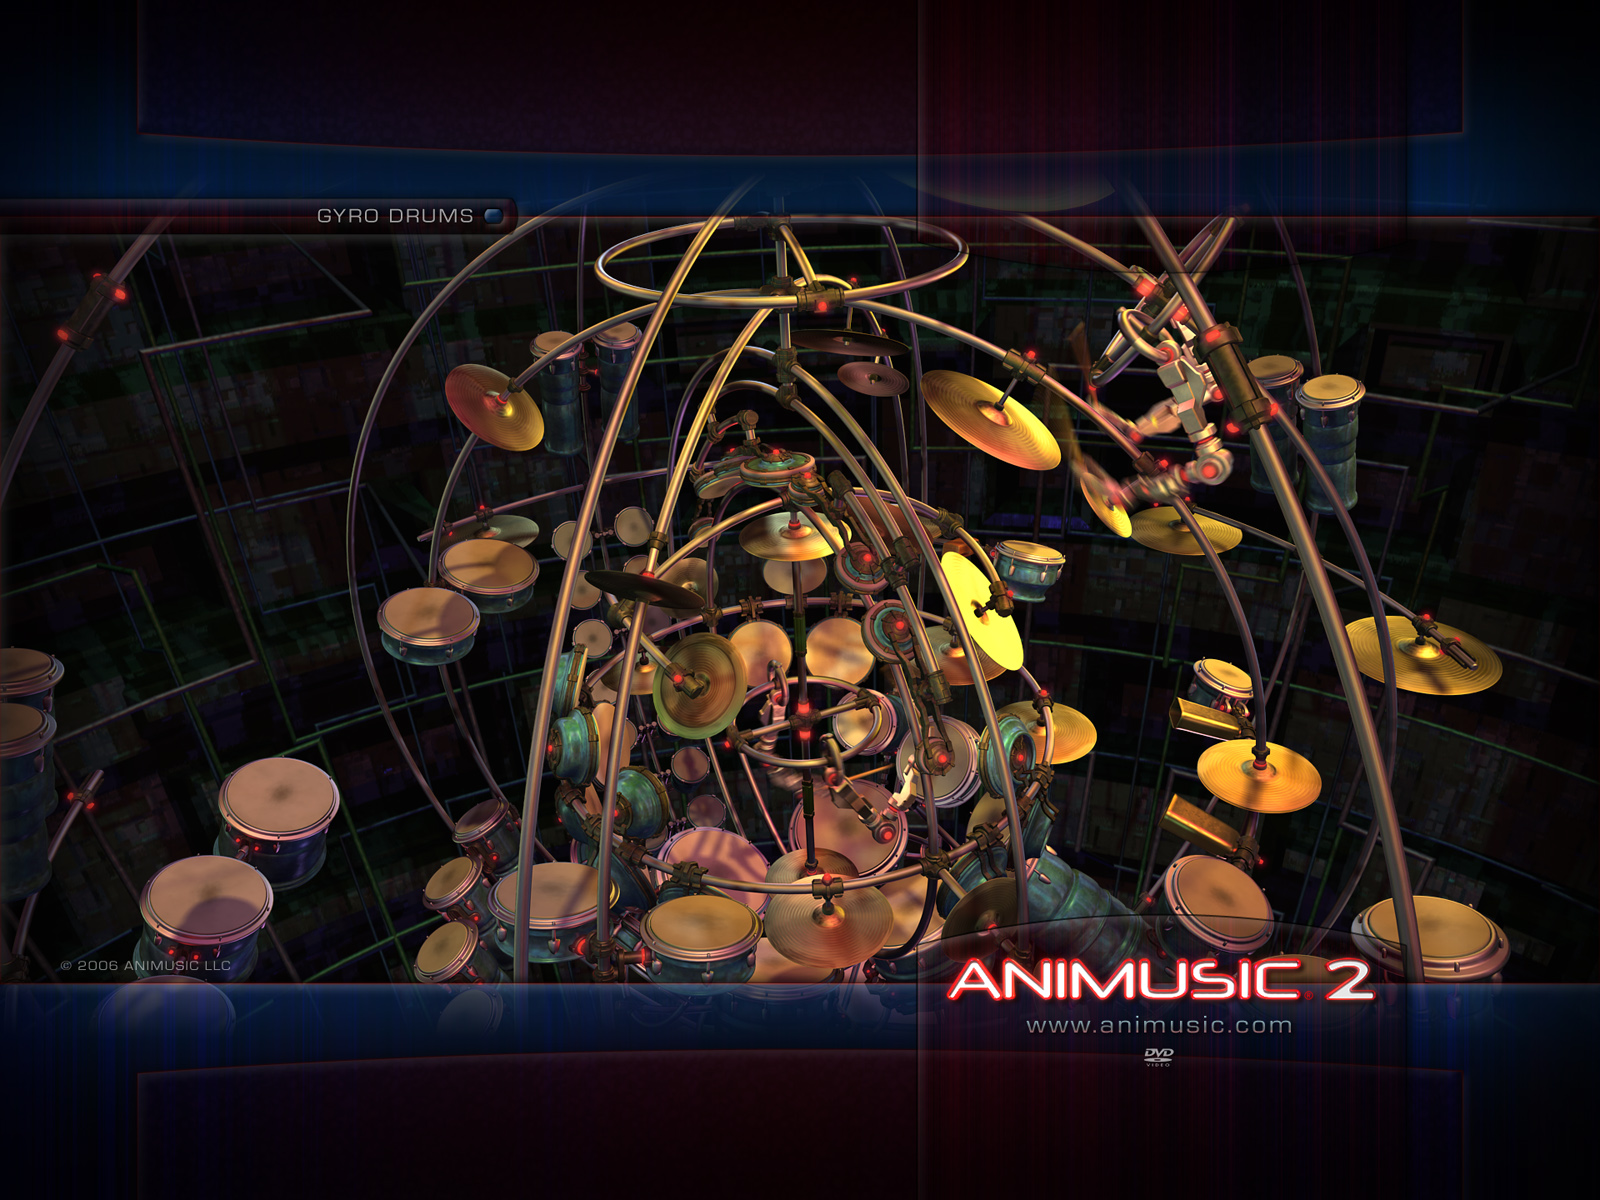 Animusic-2-Wallpaper-Gyro-Drums-2.jpg